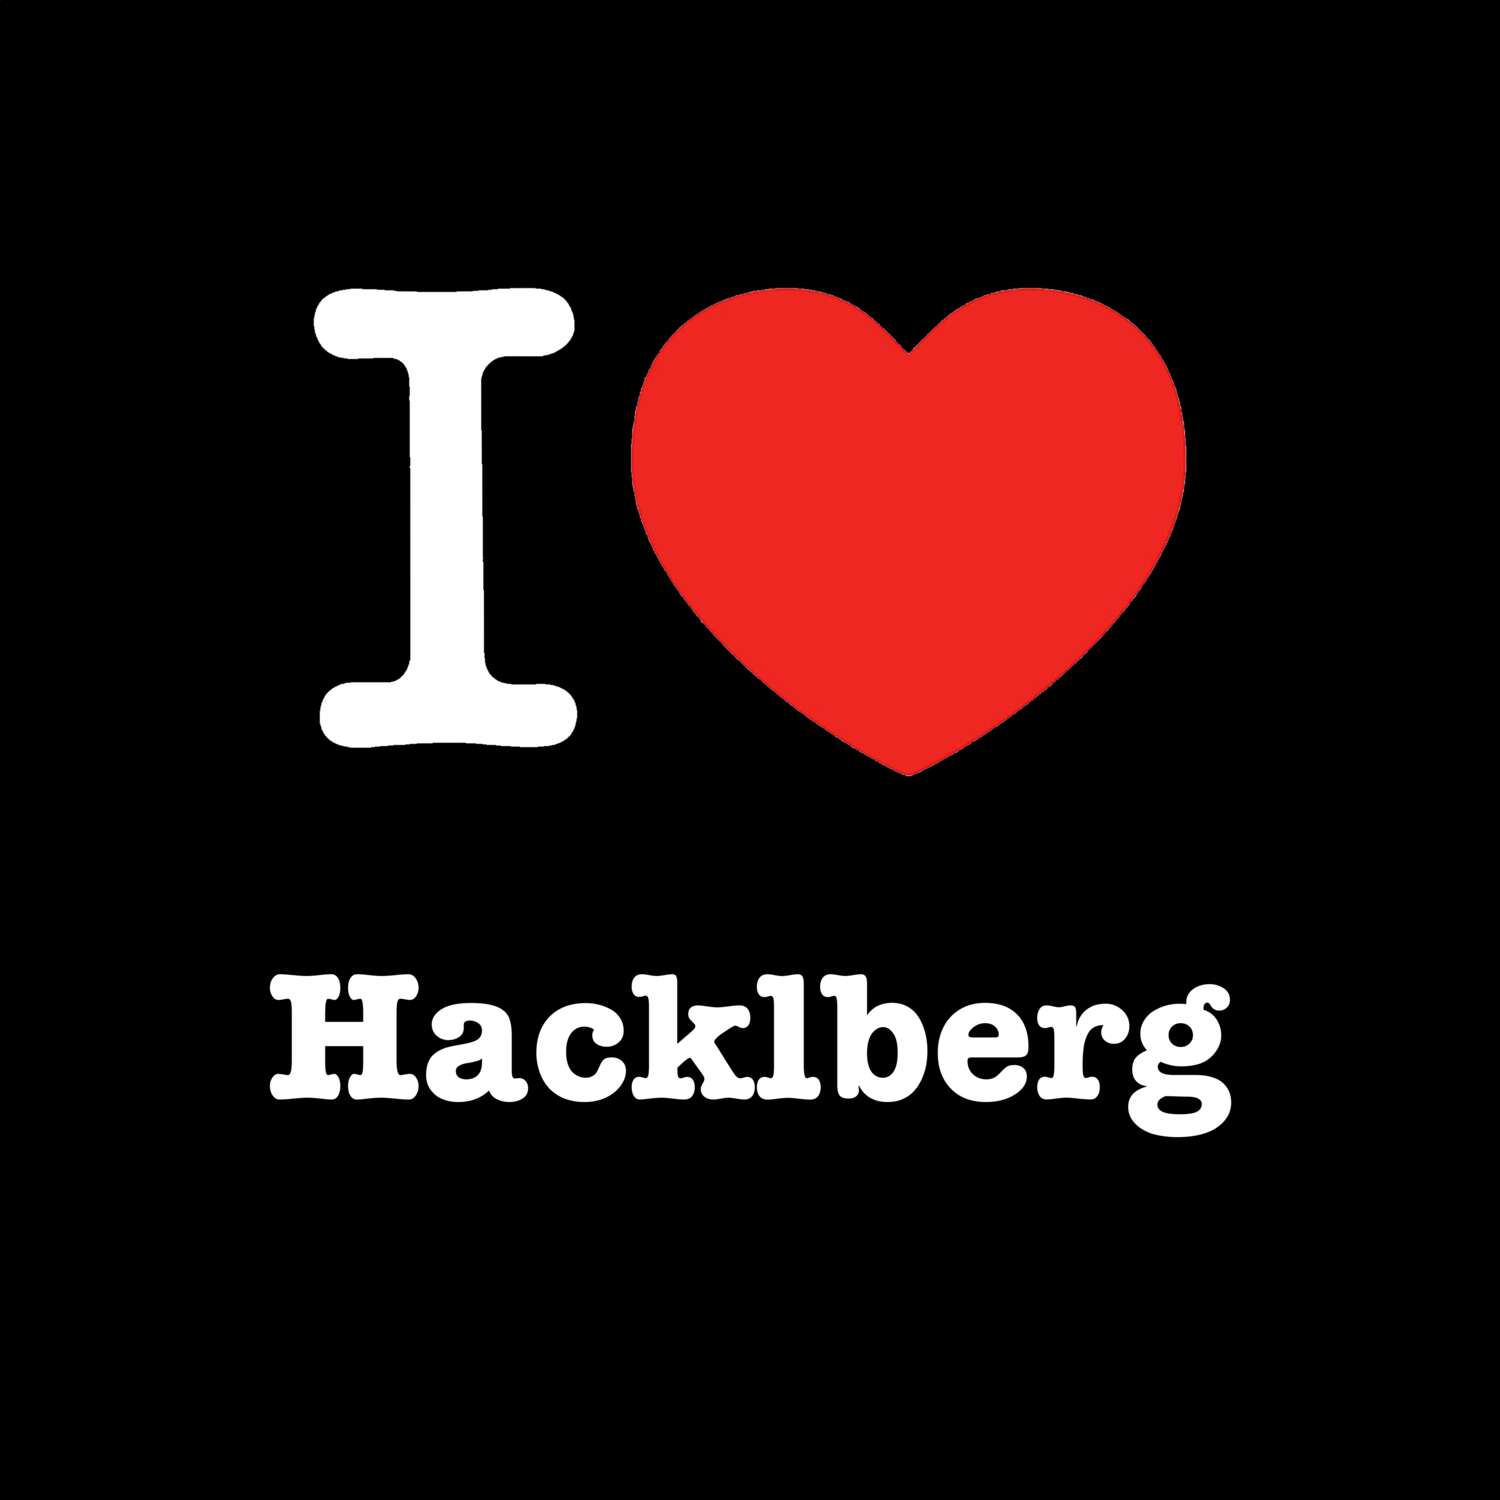 Hacklberg T-Shirt »I love«